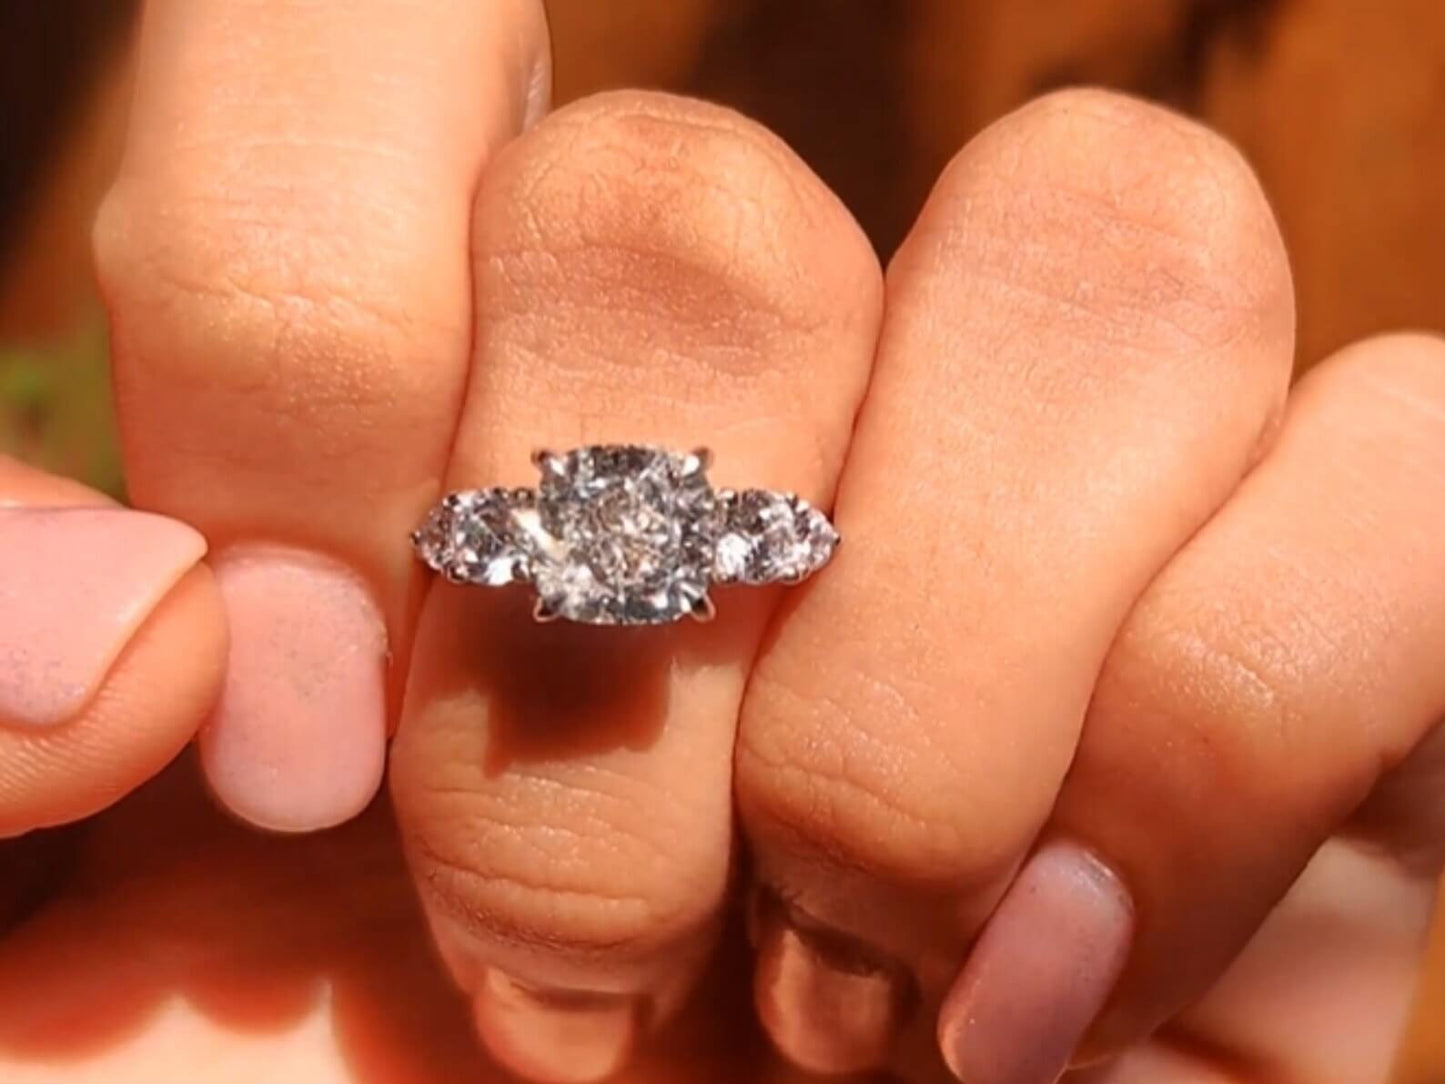 Elongated Cushion Cut Diamond Ring, Lab Grown Diamond Engagement Ring